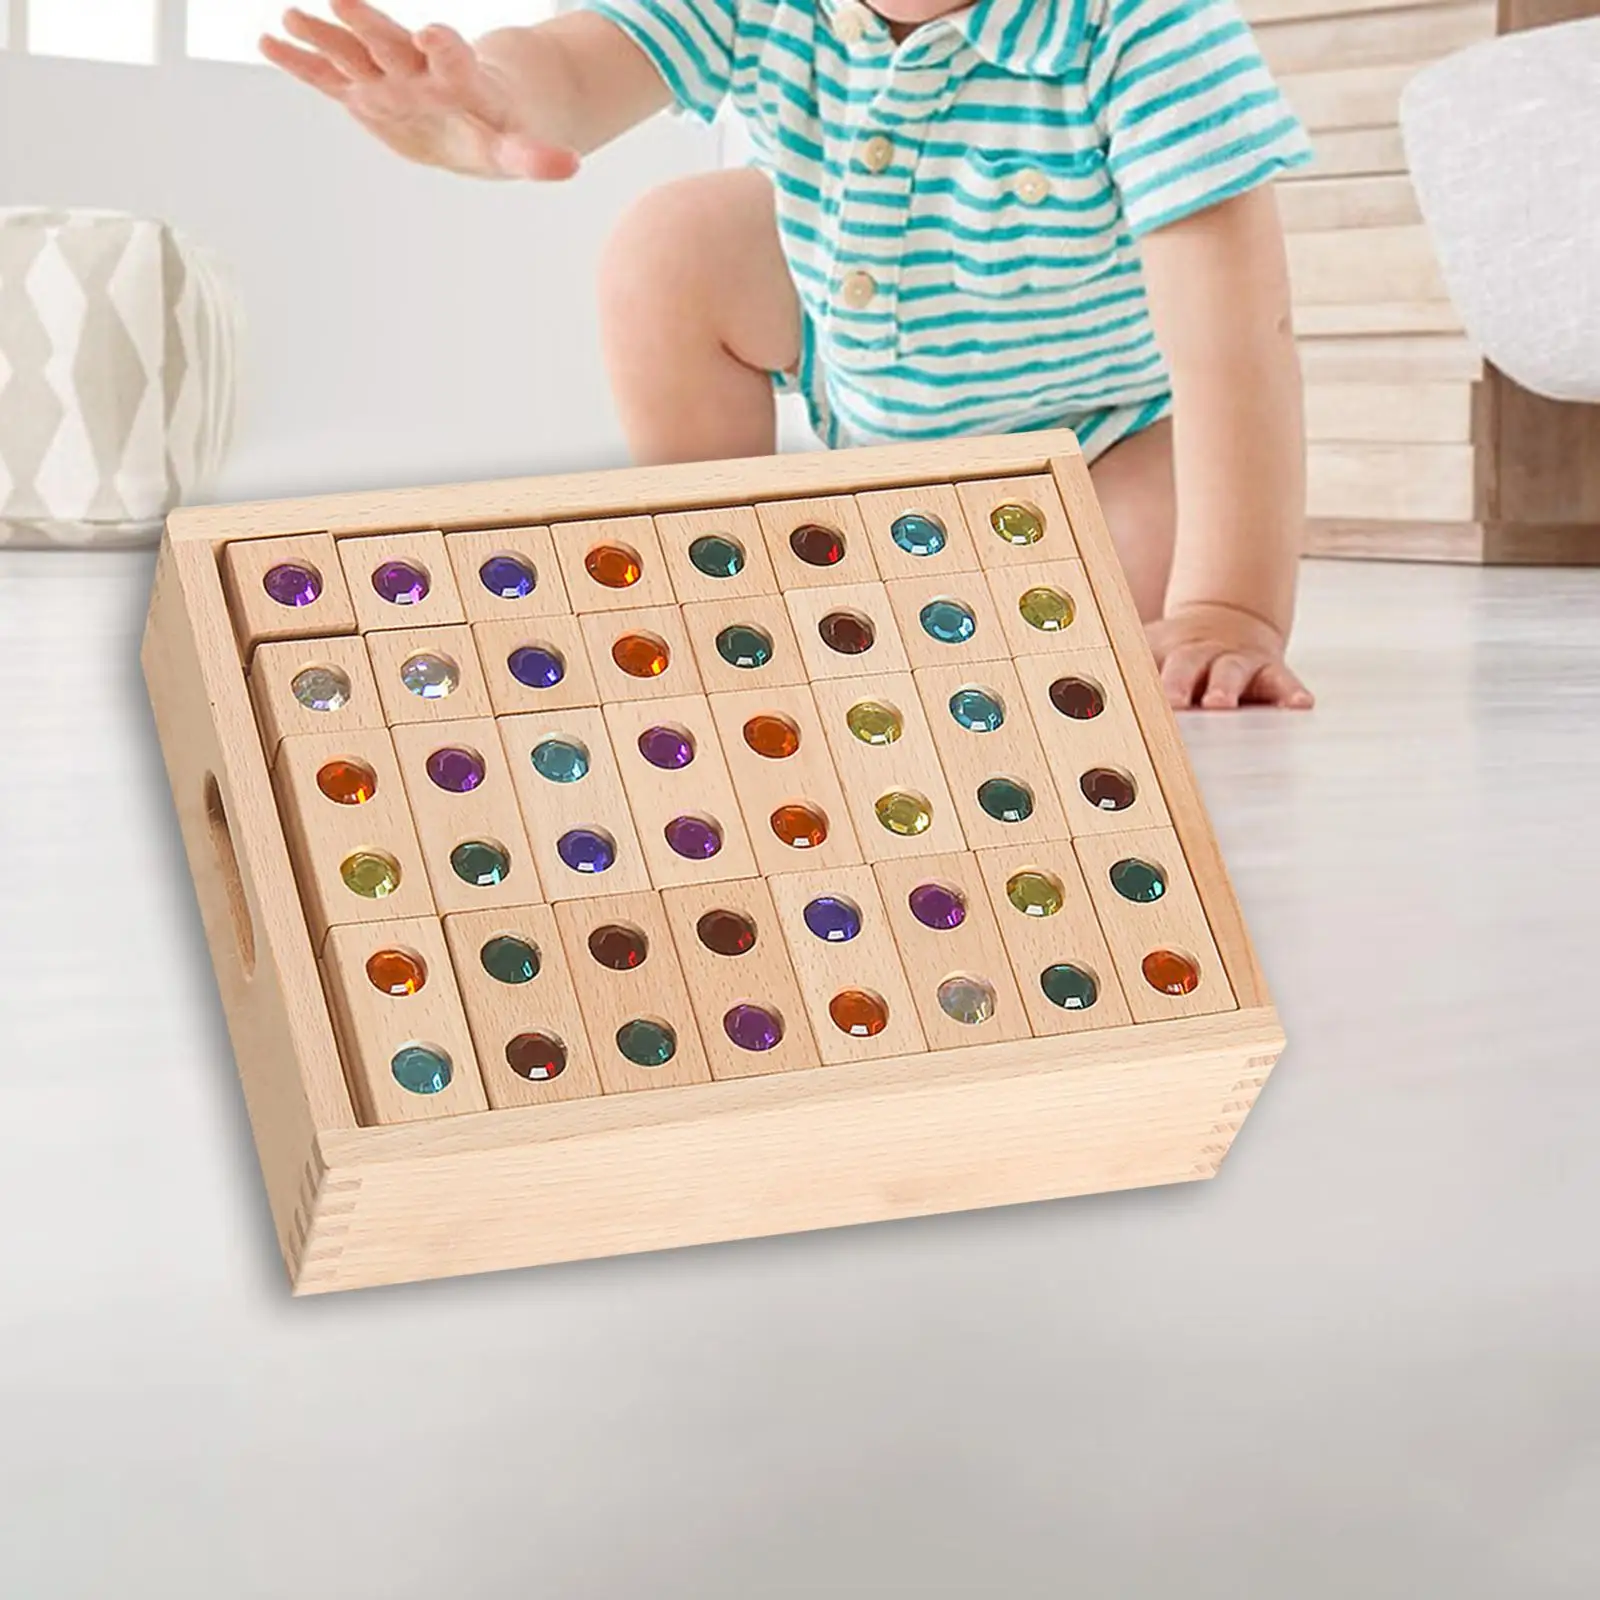 128x Rainbow Stacking Montessori Toys Wooden Building Blocks Rainbow Blocks for Toddlers Kids Preschool Girls Boys Baby